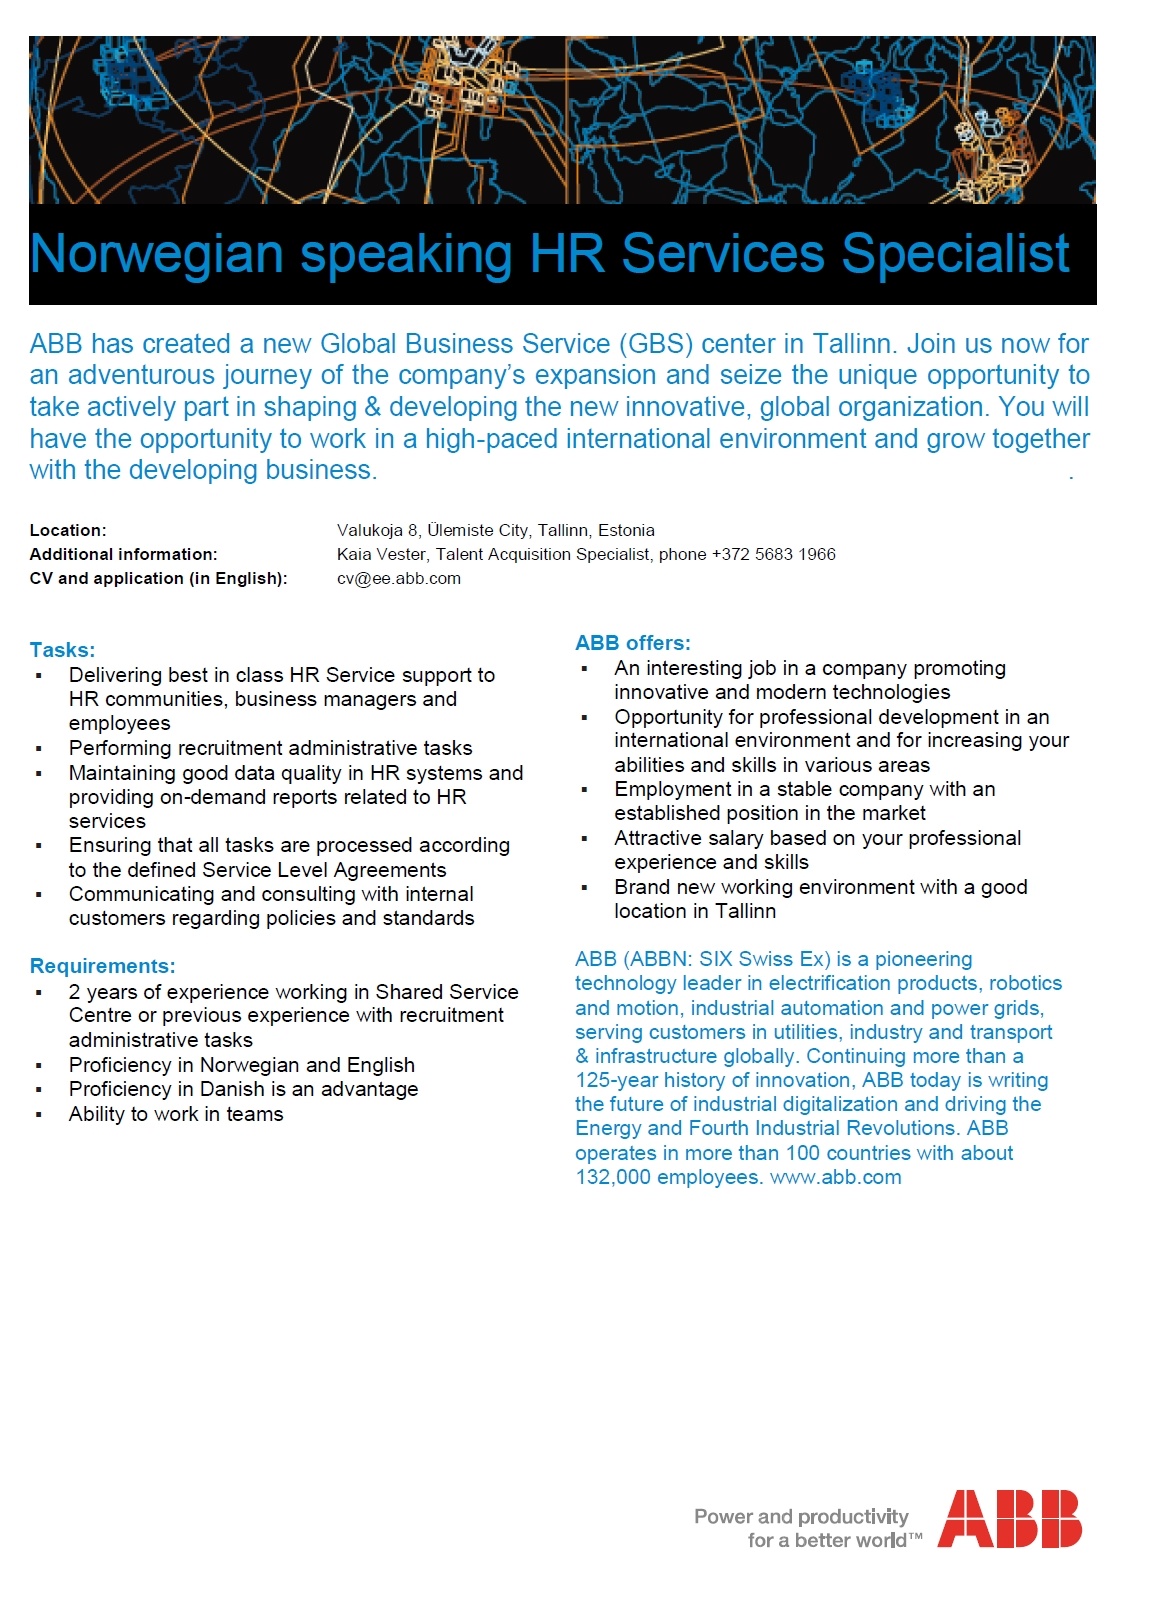 ABB AS Norwegian speaking HR Services Specialist